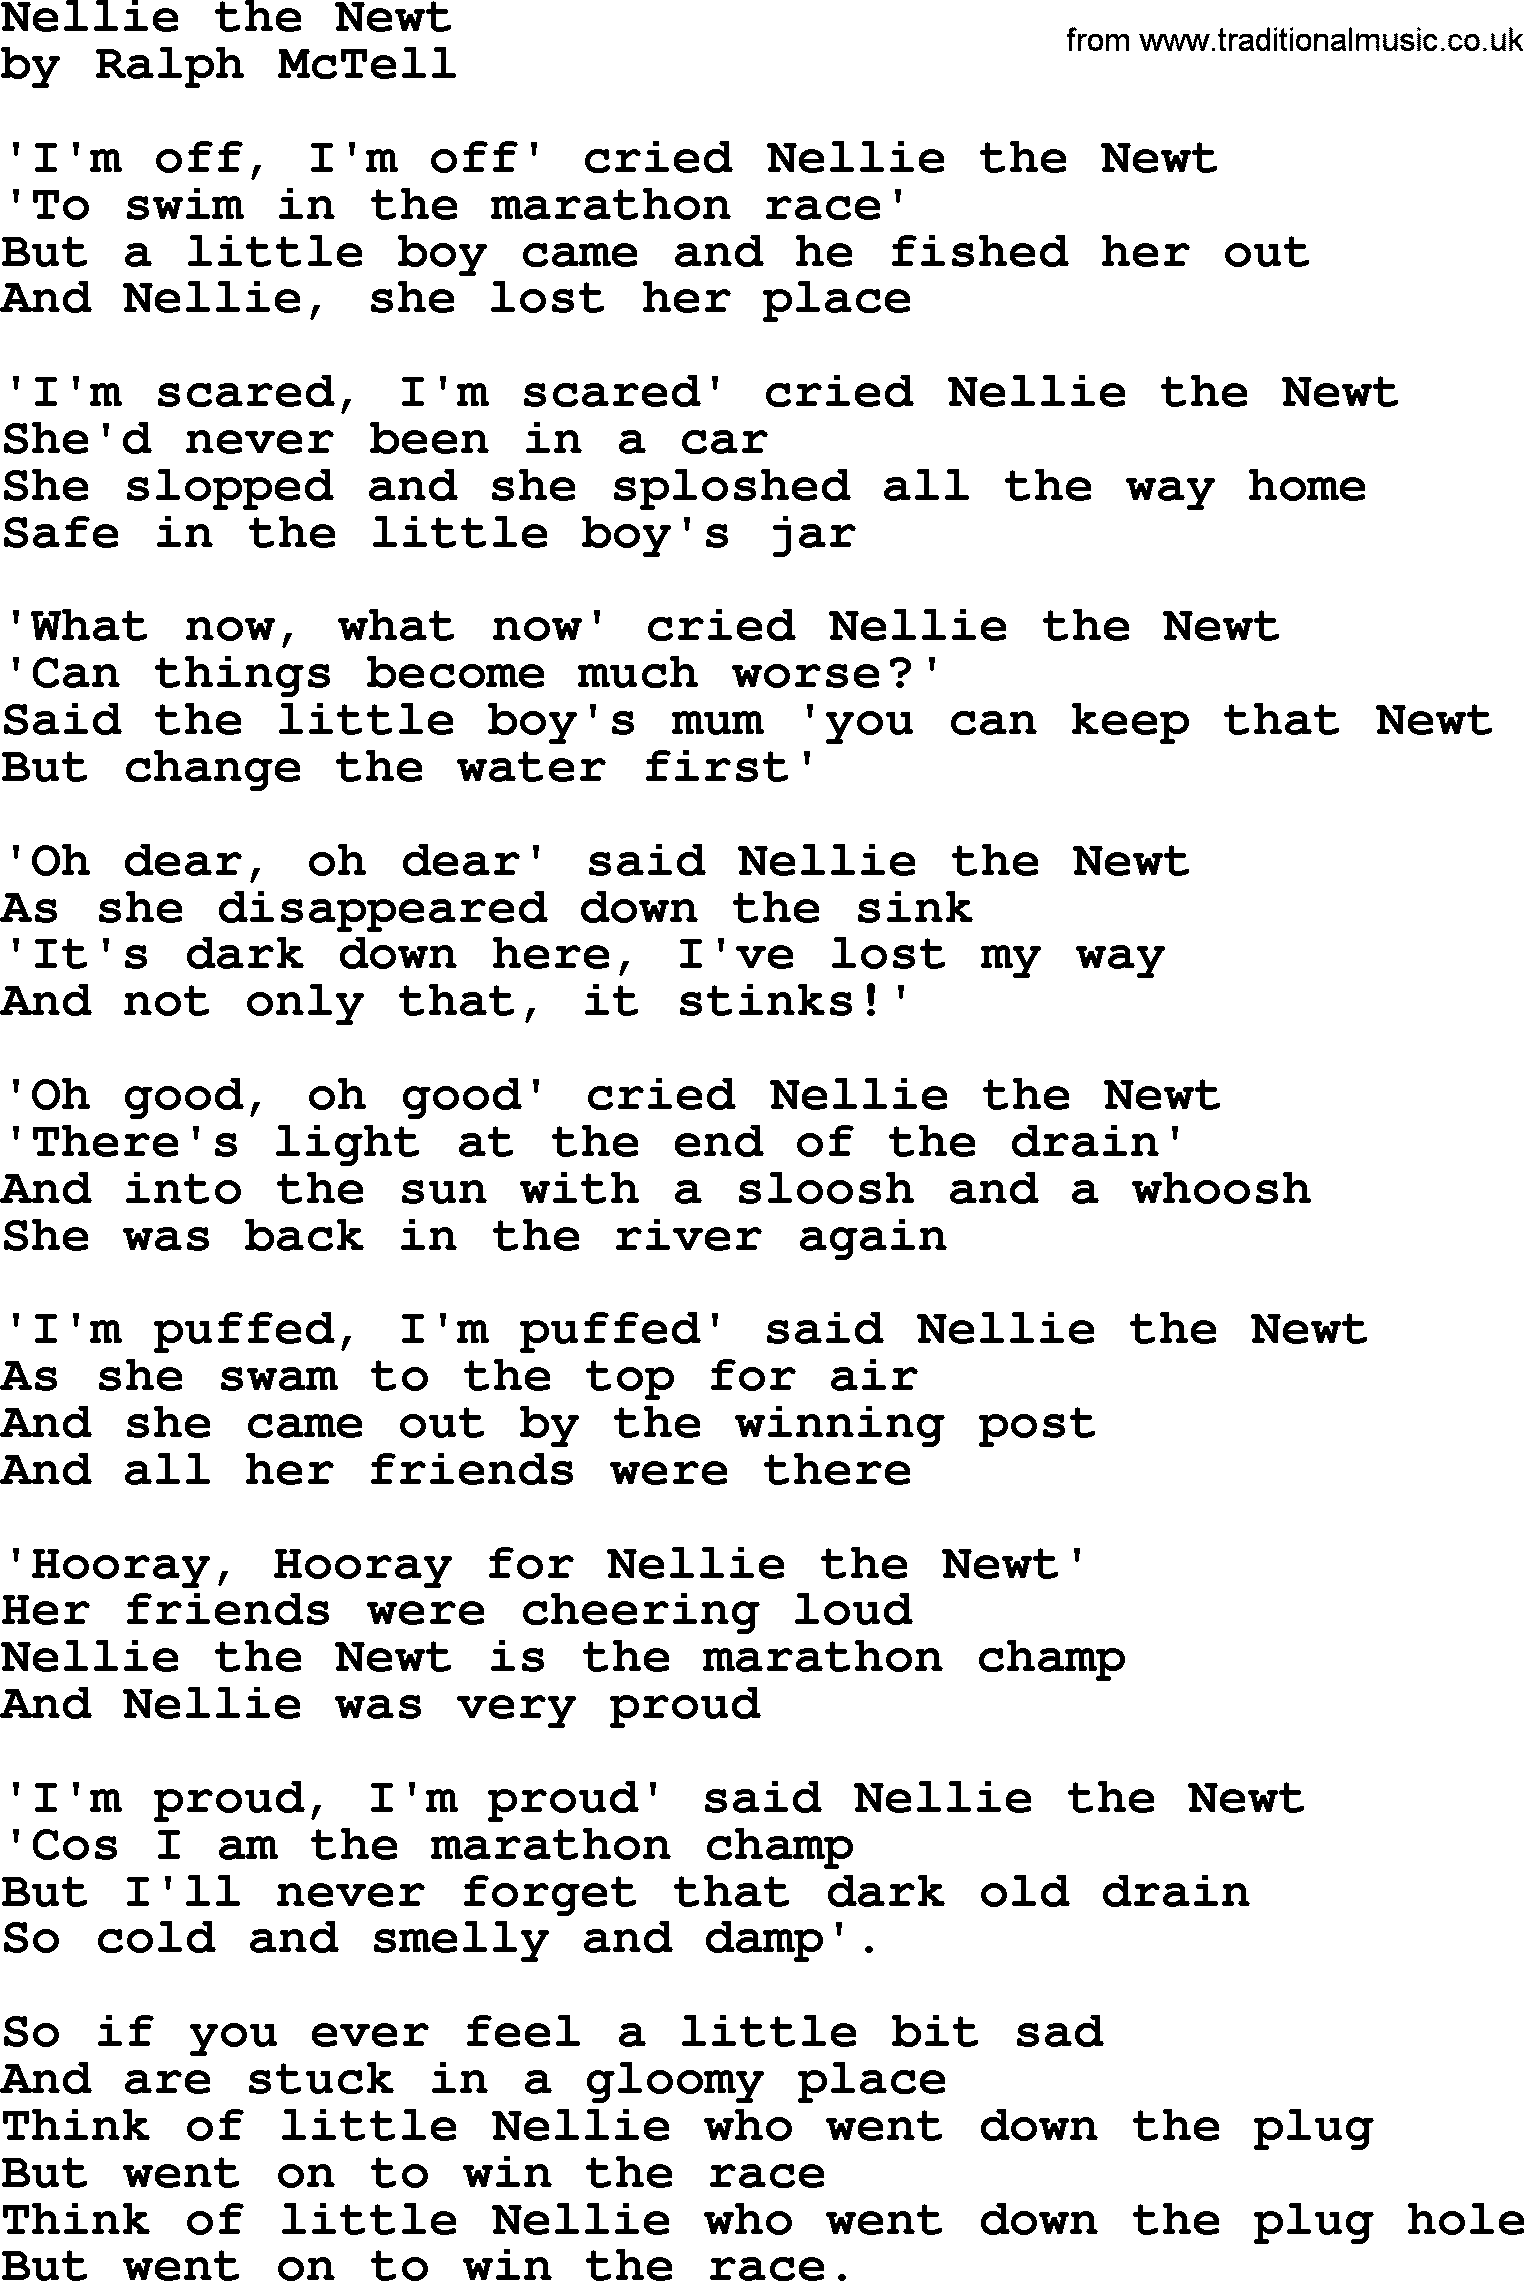 Ralph McTell Song: Nellie The Newt, lyrics